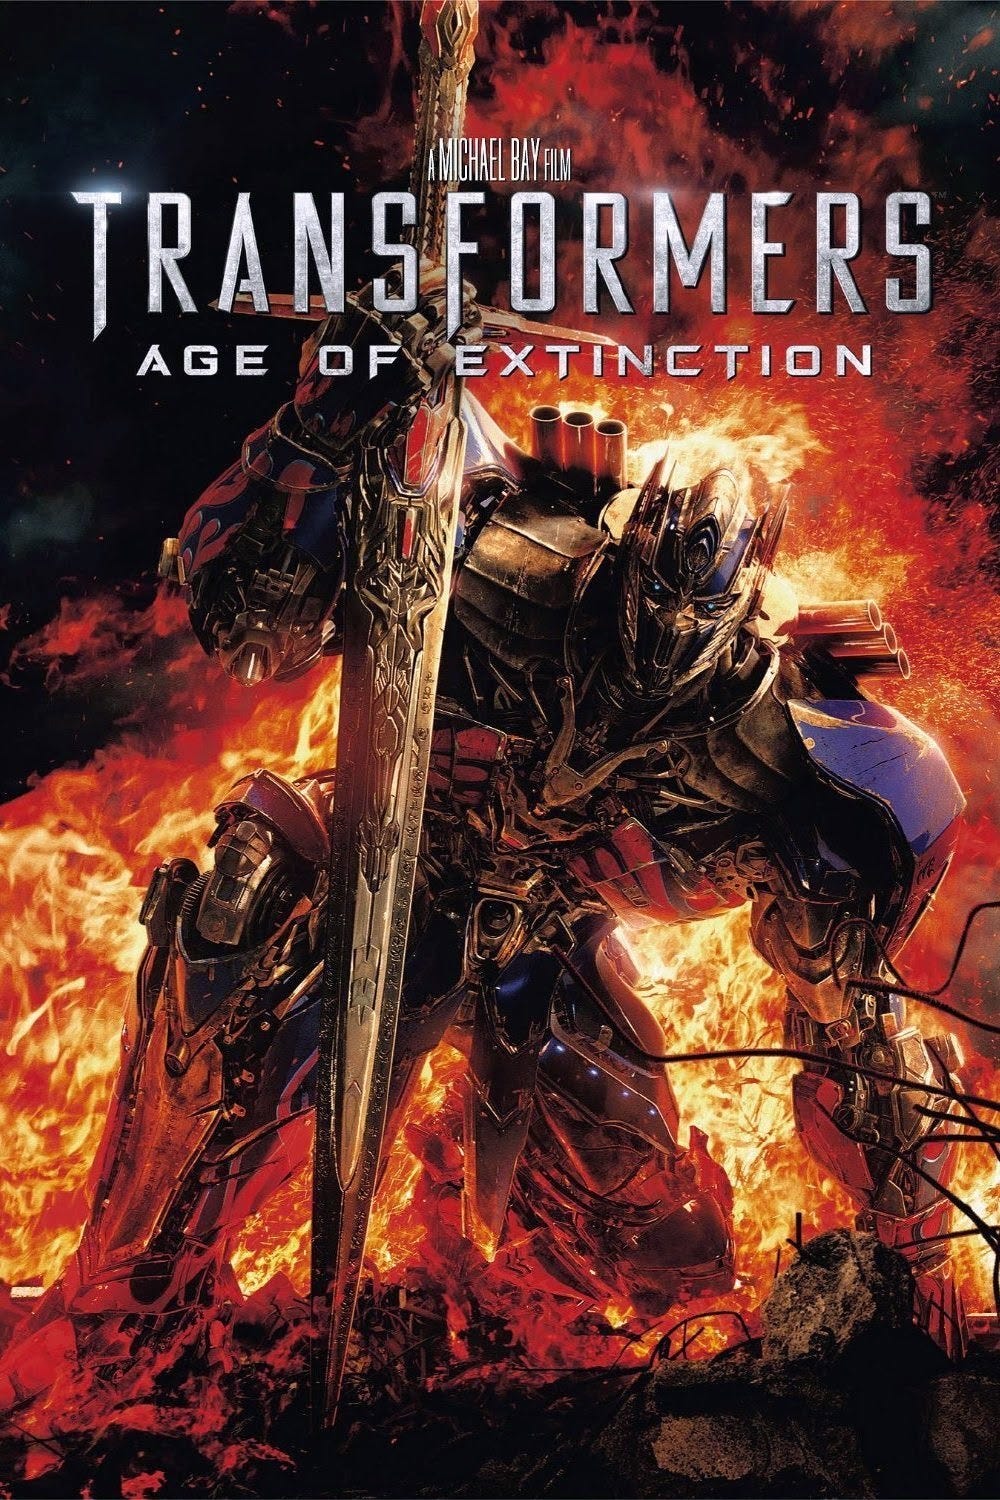 [MINI Super-HQ] Transformers: Age of Extinction (2014) ทรานส์ฟอร์เมอร์ส มหาวิบัติยุคสูญพันธุ์ ภาค 4 [IMAX] [1080p] [พากย์ไทย DTS + เสียงอังกฤษ DTS] [บรรยายไทย + อังกฤษ] [เสียงไทย + ซับไทย] [DOSYAUPLOAD]